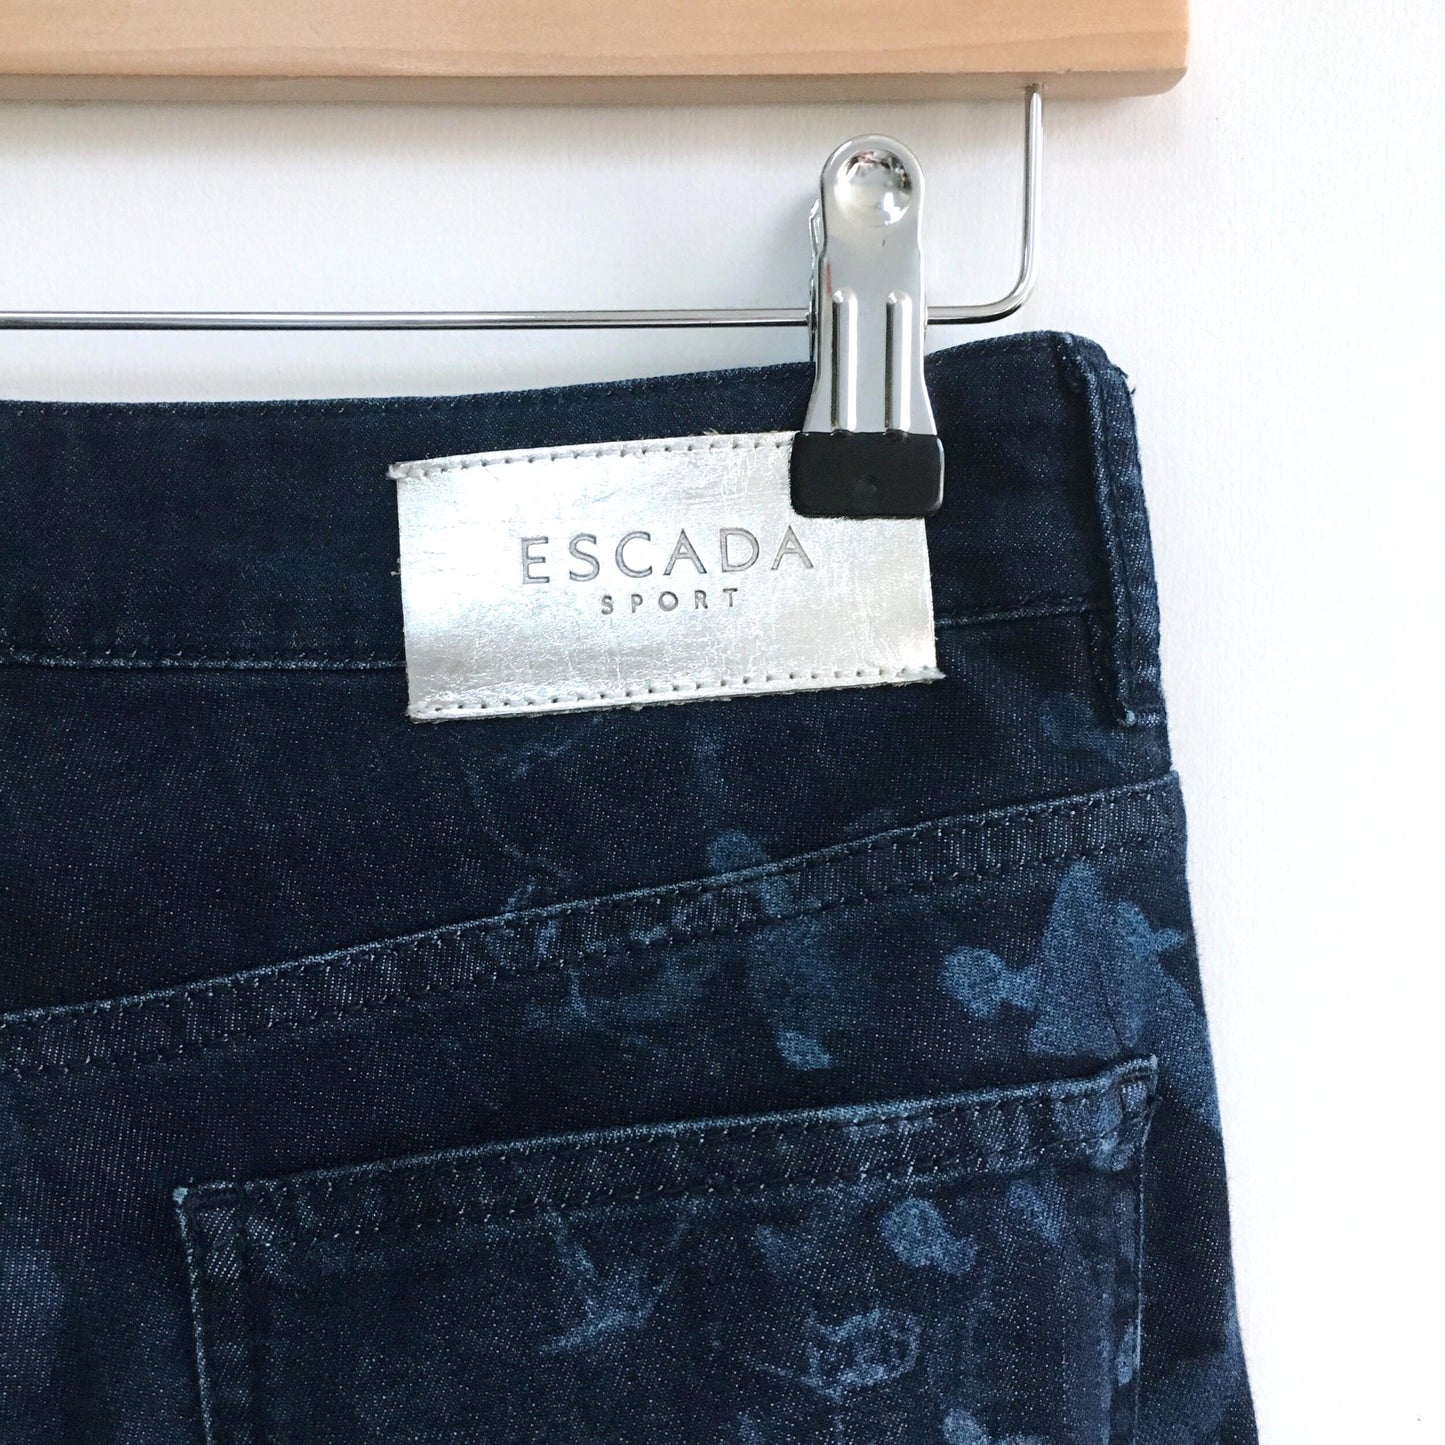 Escada Sport Jeans - size 34